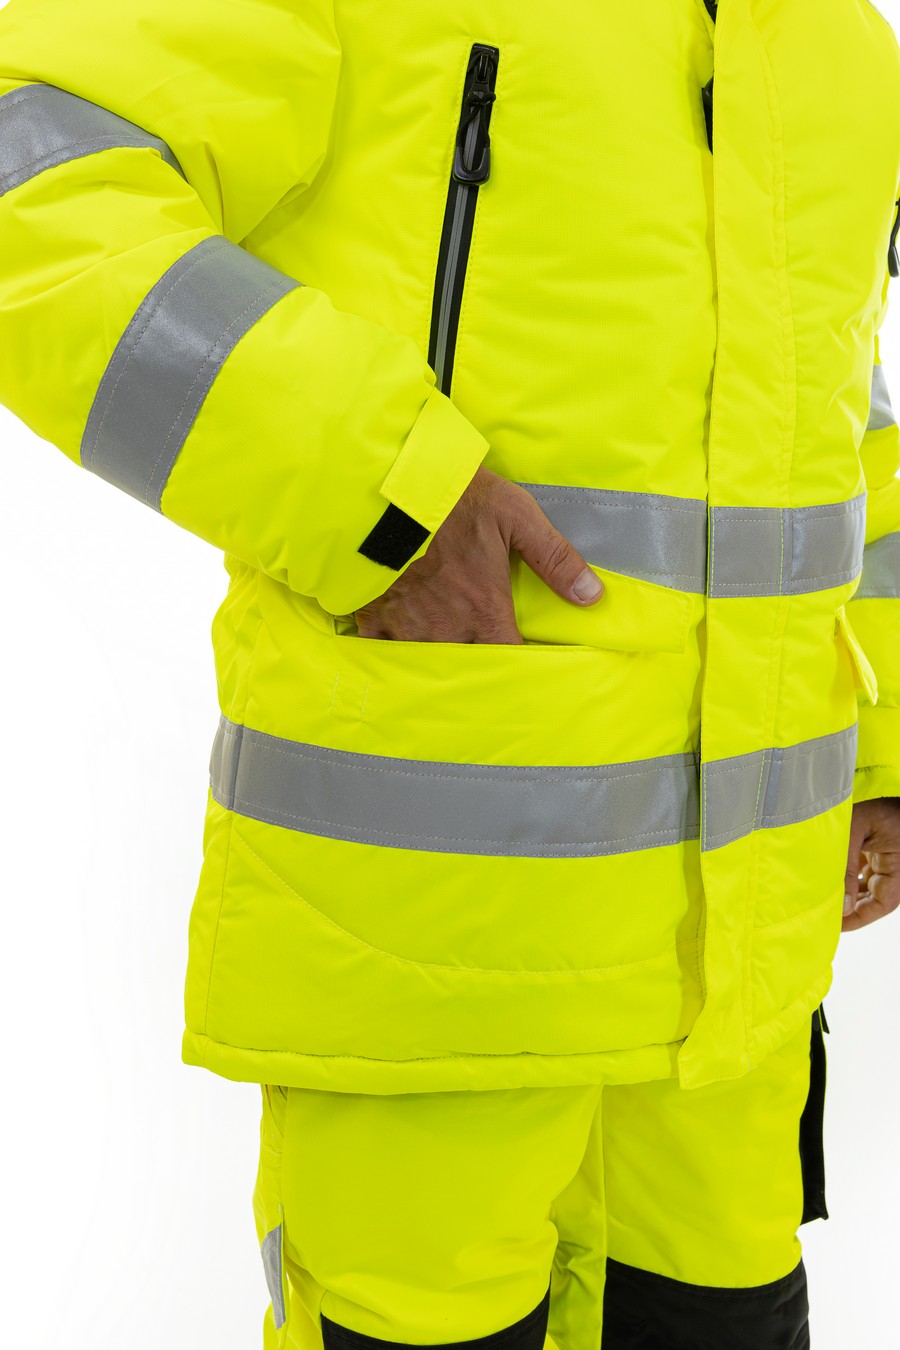 Зимняя сигнальная куртка-парка BRODEKS KW220, желтый/черный